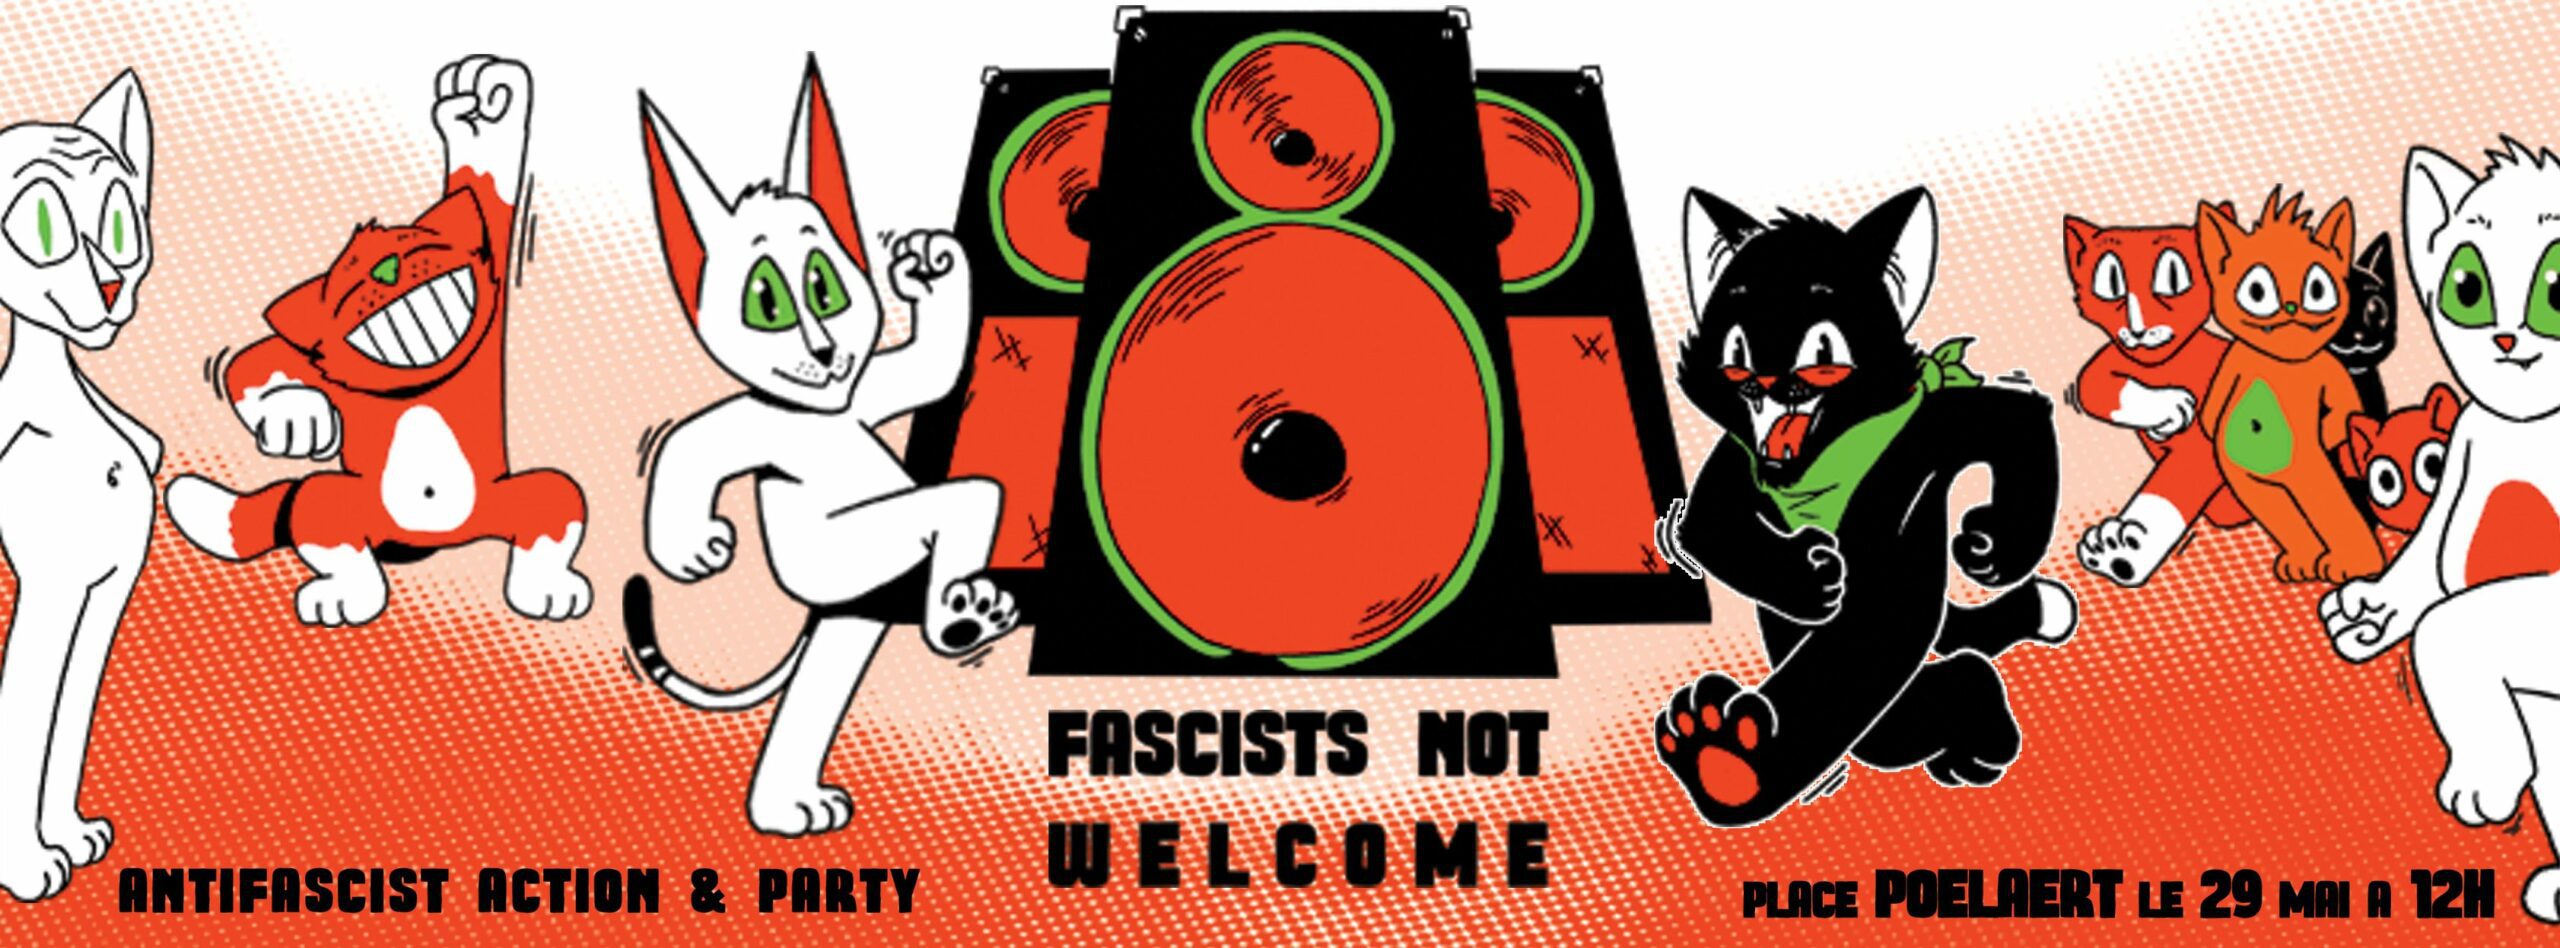 Image Fascists not welcome ! Rassemblement antifasciste